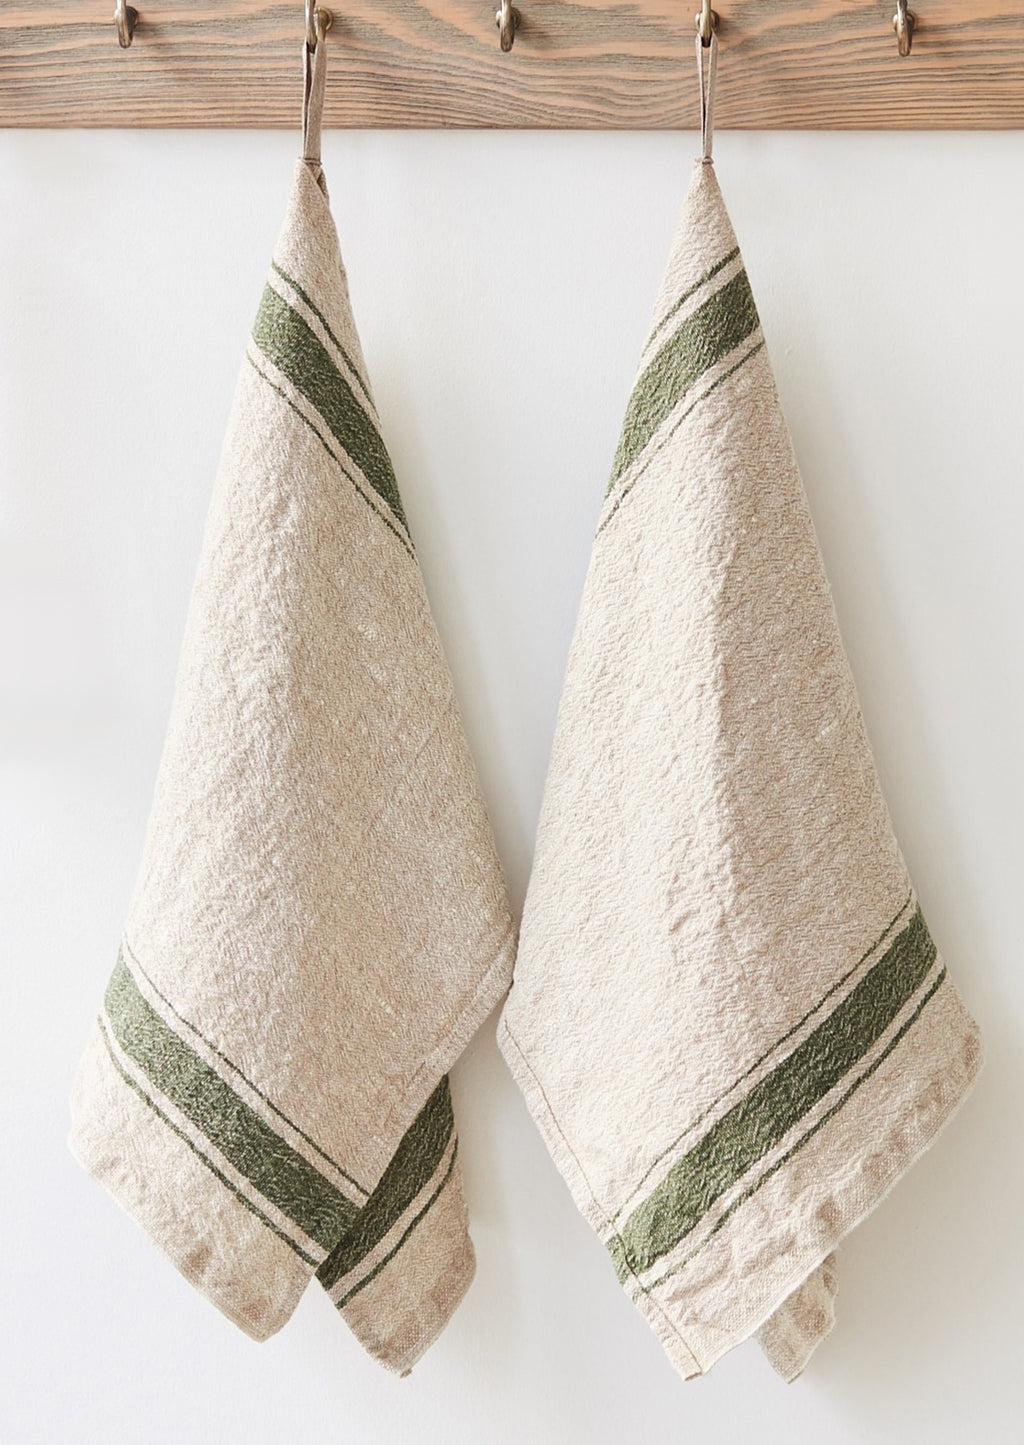 Green: Vintage linen tea towels with olive green stripe.